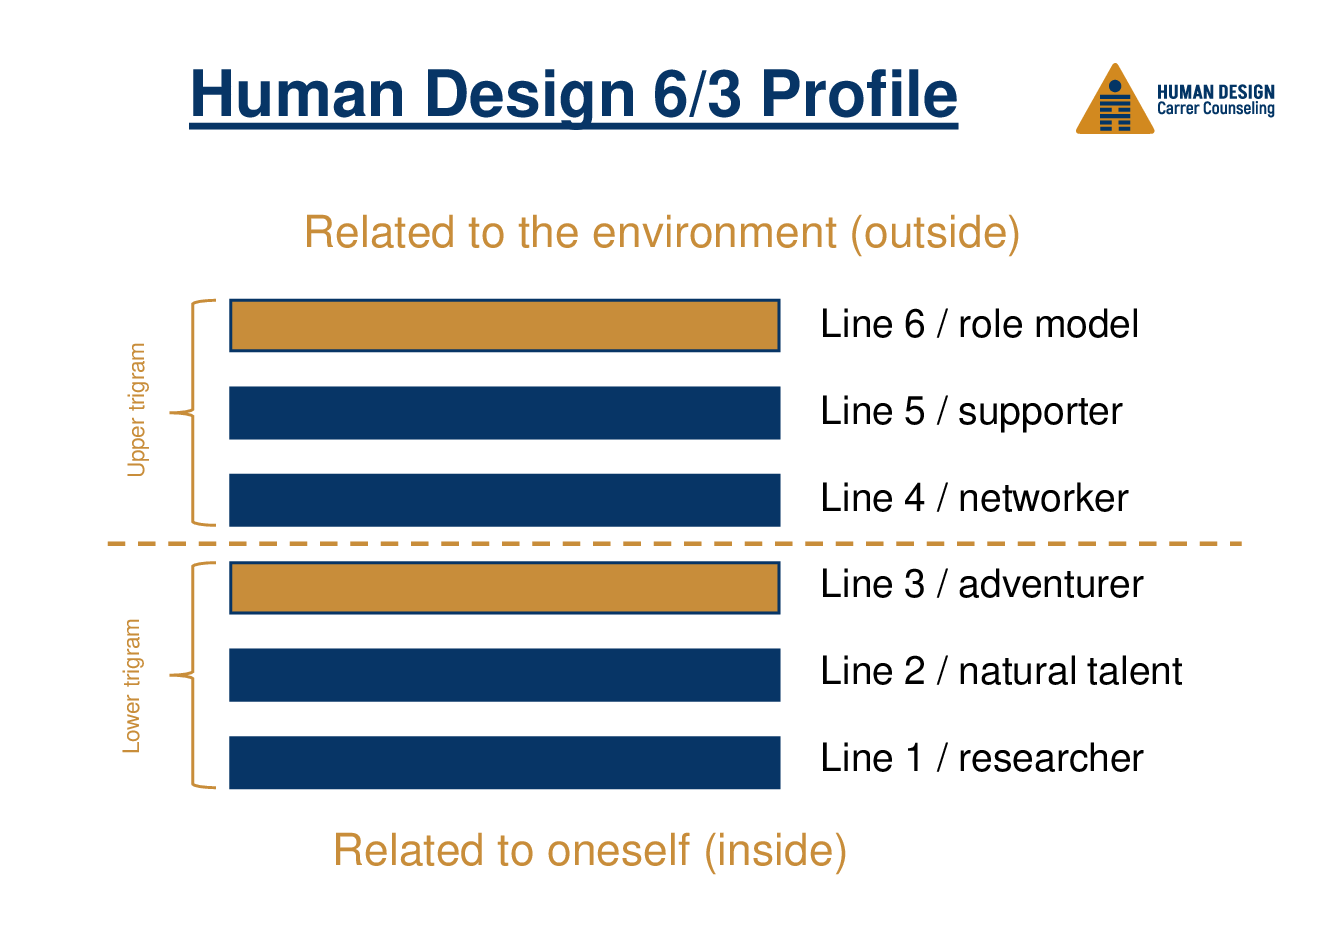 Human Design 6/3 Profile on the job